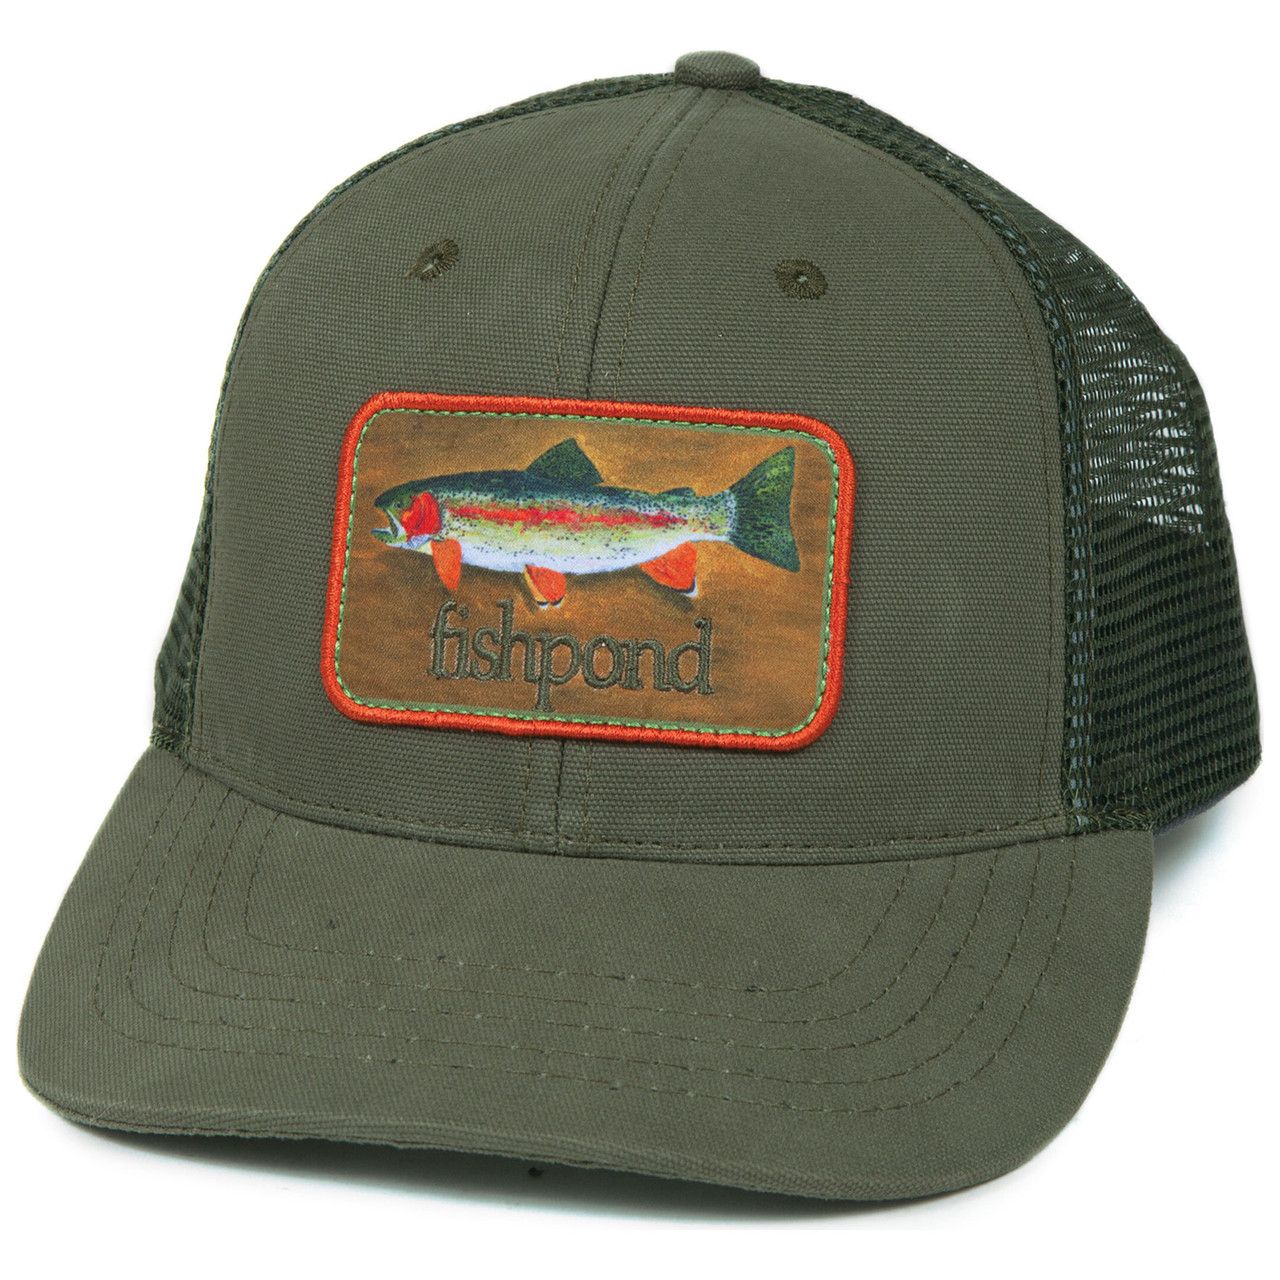 https://cdn11.bigcommerce.com/s-2vv8l4co0l/images/stencil/1280x1280/products/1165/2660/101467-fishpond-rainbow-trout-trucker-hat-olive-01__55439.1573763068.jpg?c=2